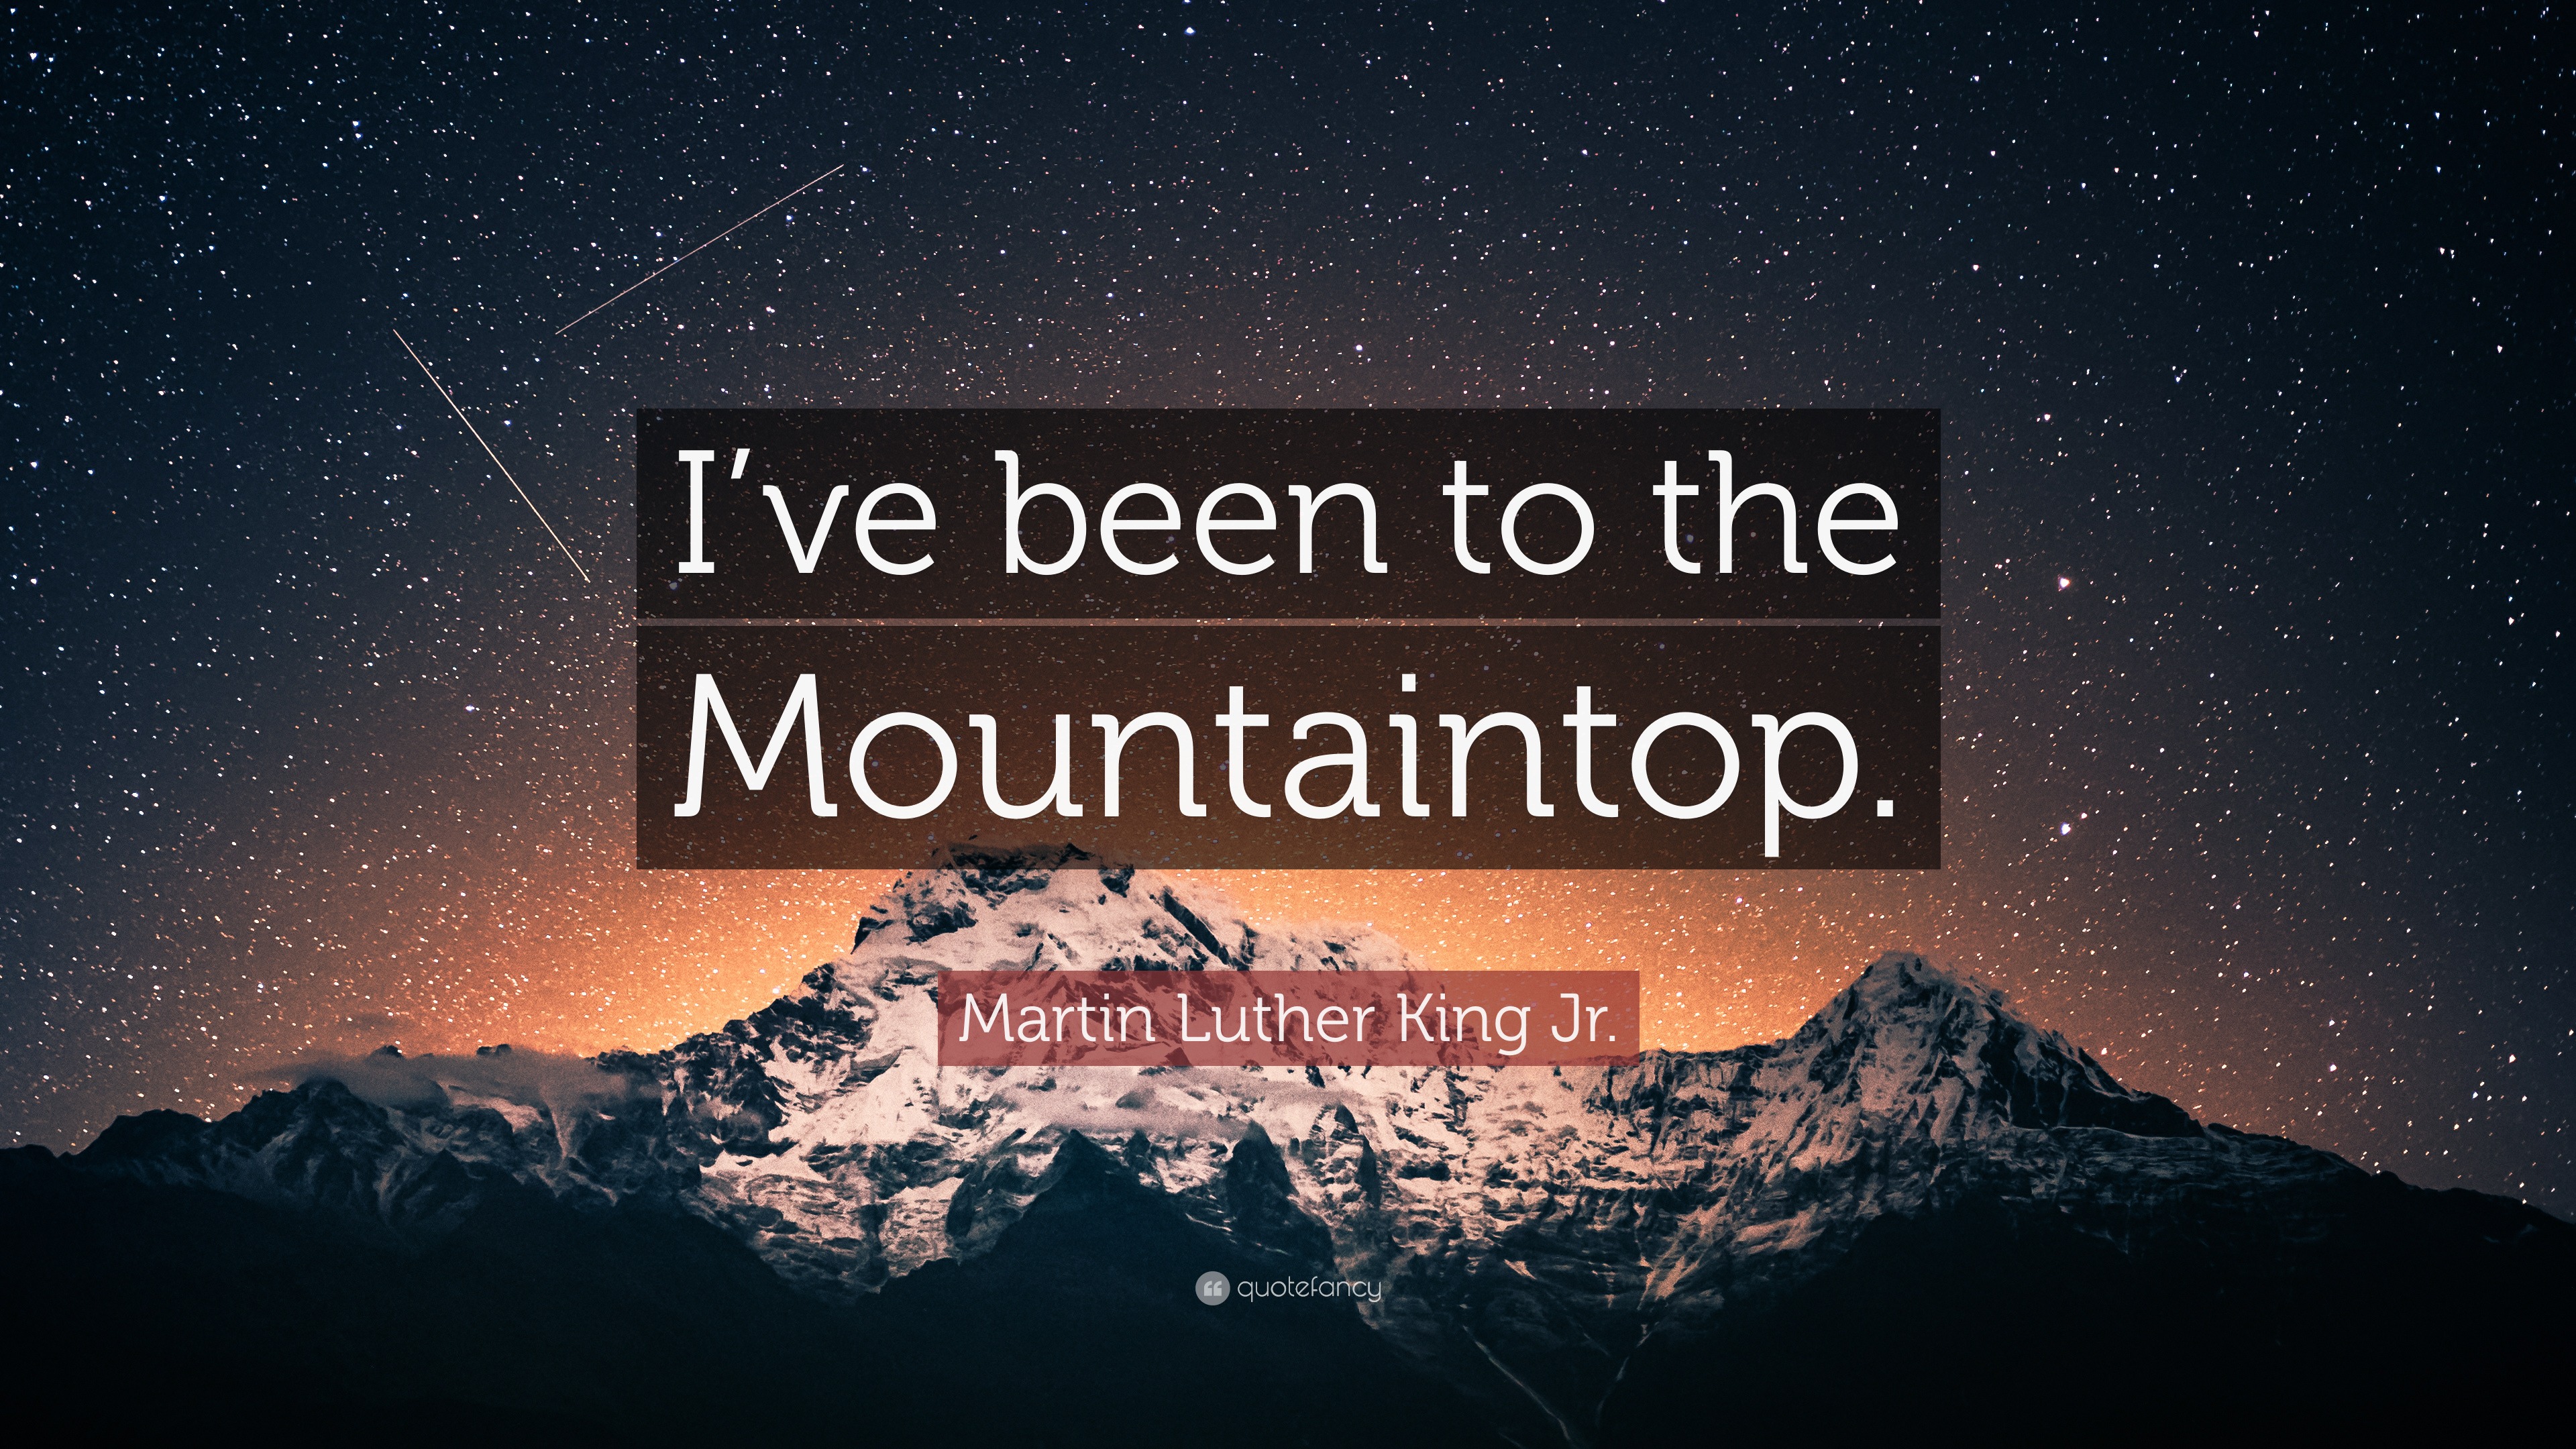 usund fejl Blikkenslager Martin Luther King Jr. Quote: “I've been to the Mountaintop.”